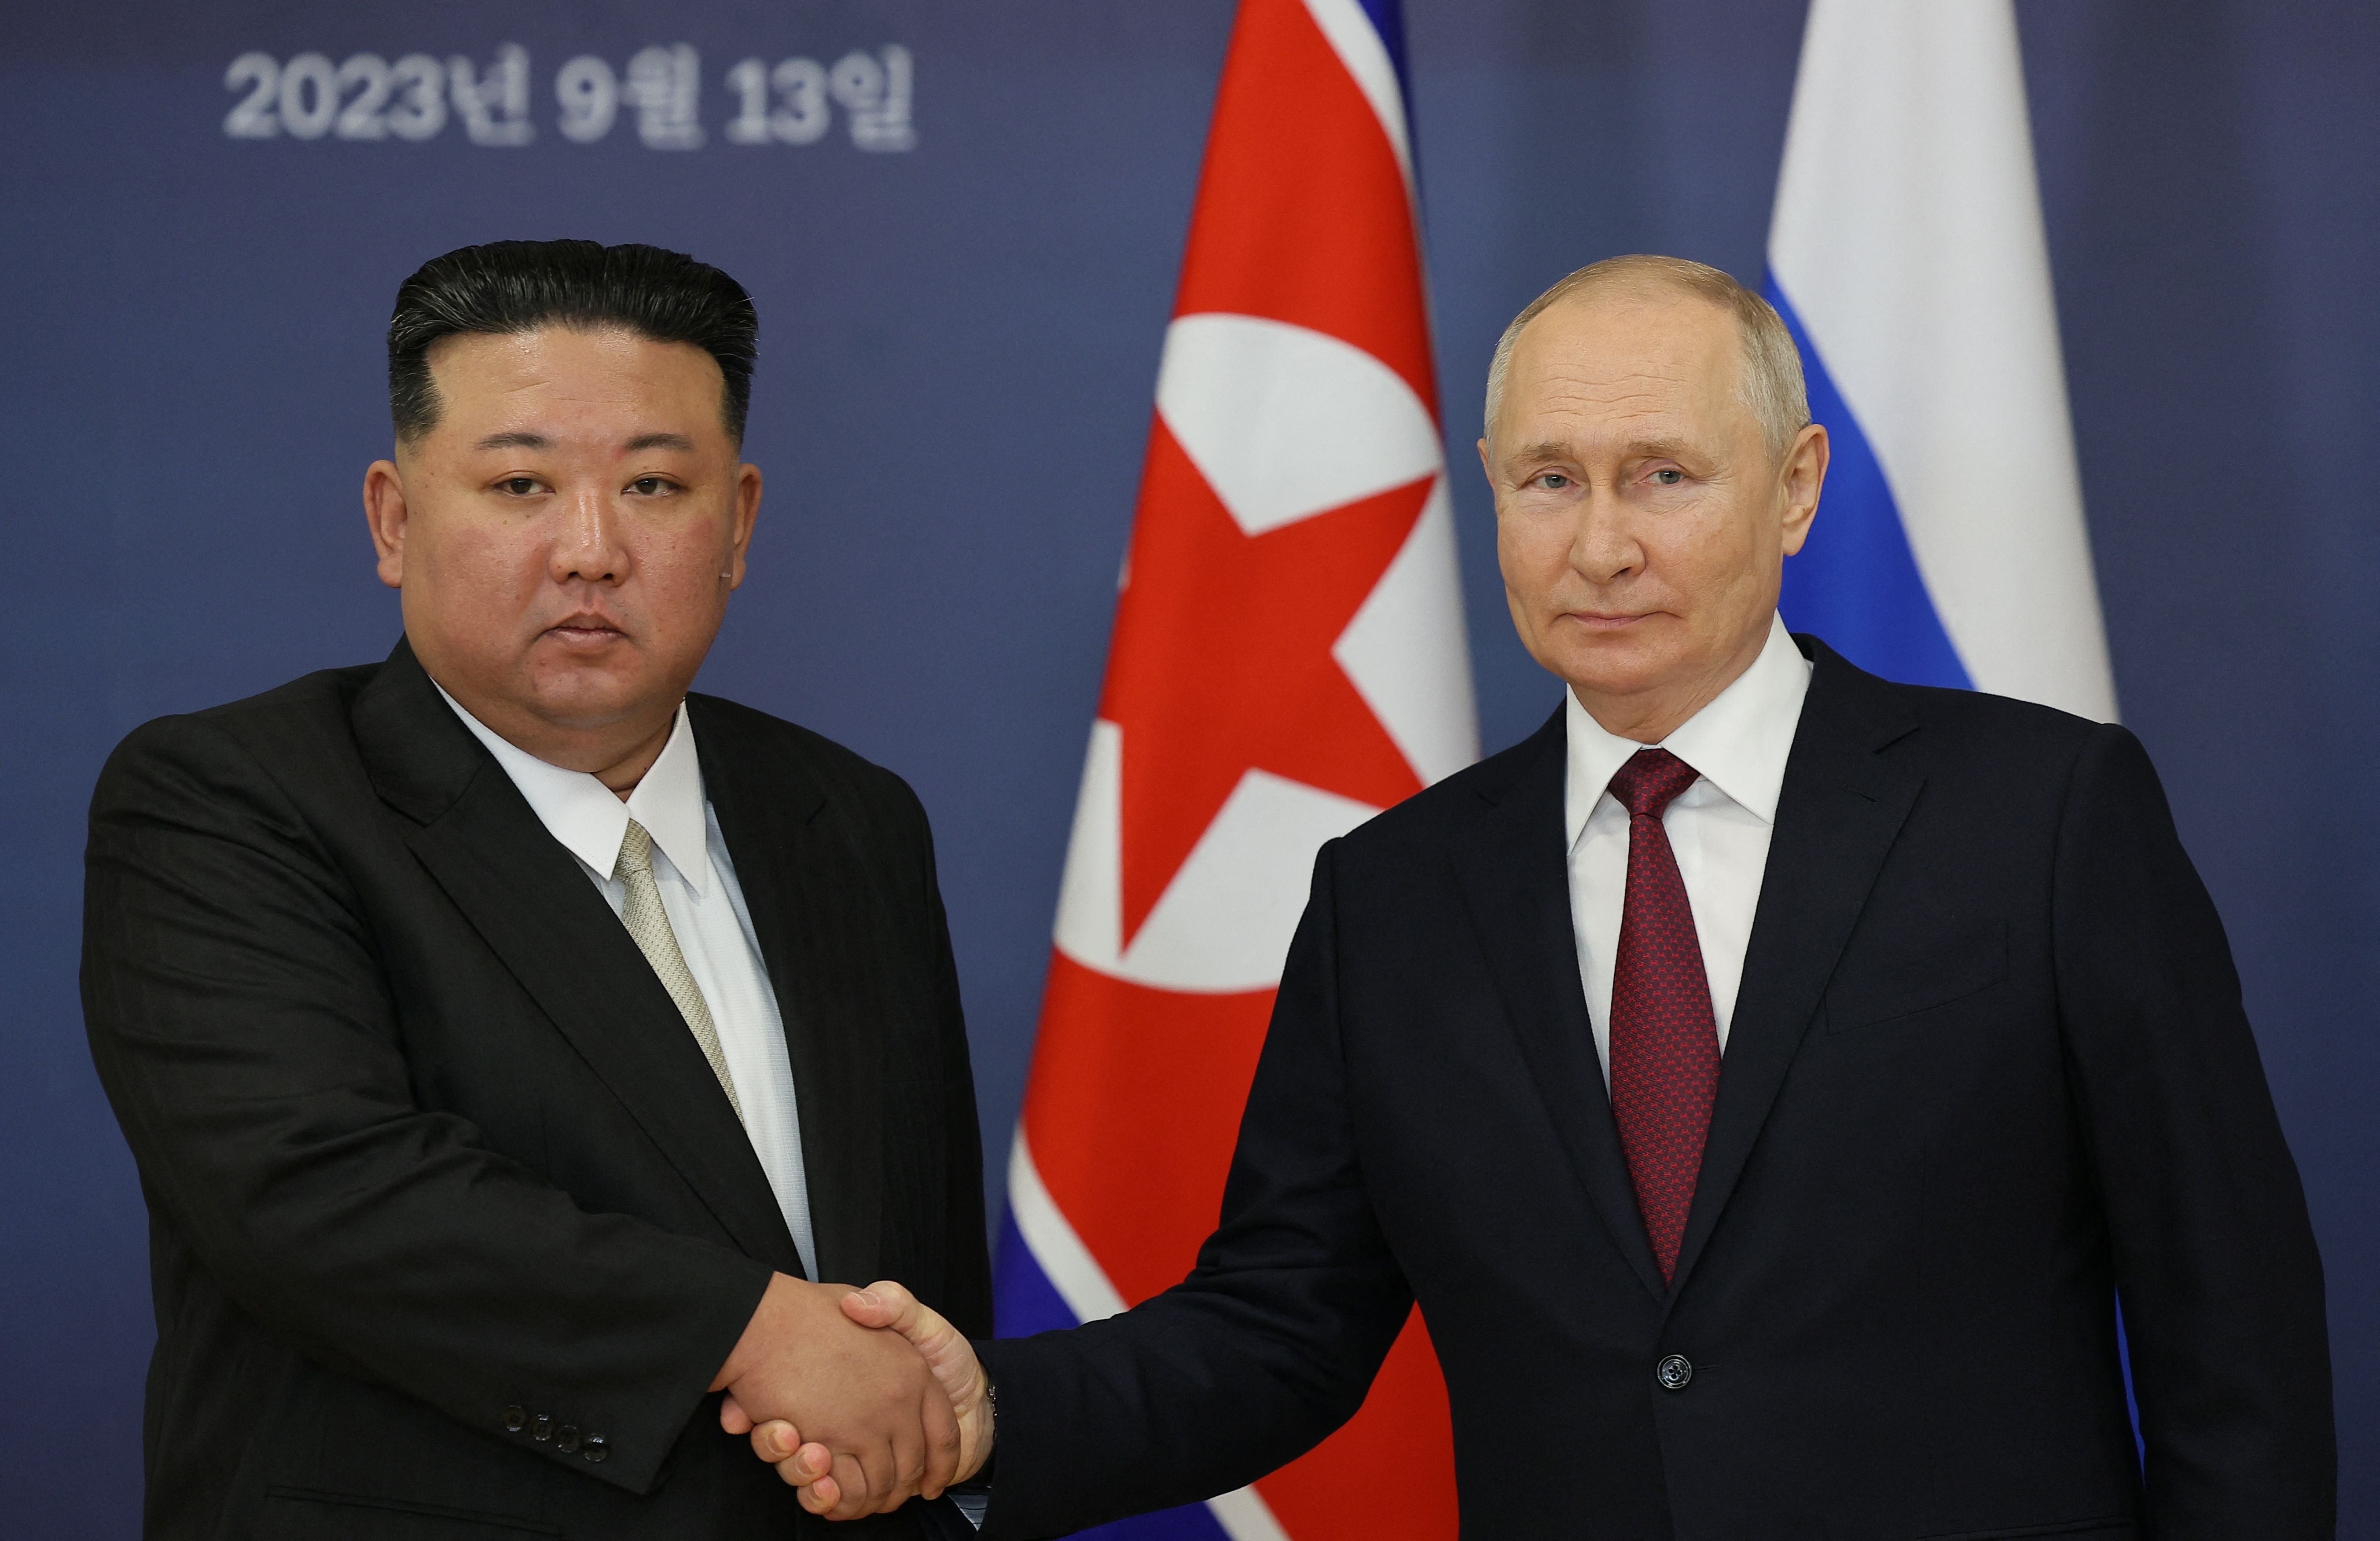 Russian President Vladimir Putin, right, and North Korea's leader Kim Jong-un